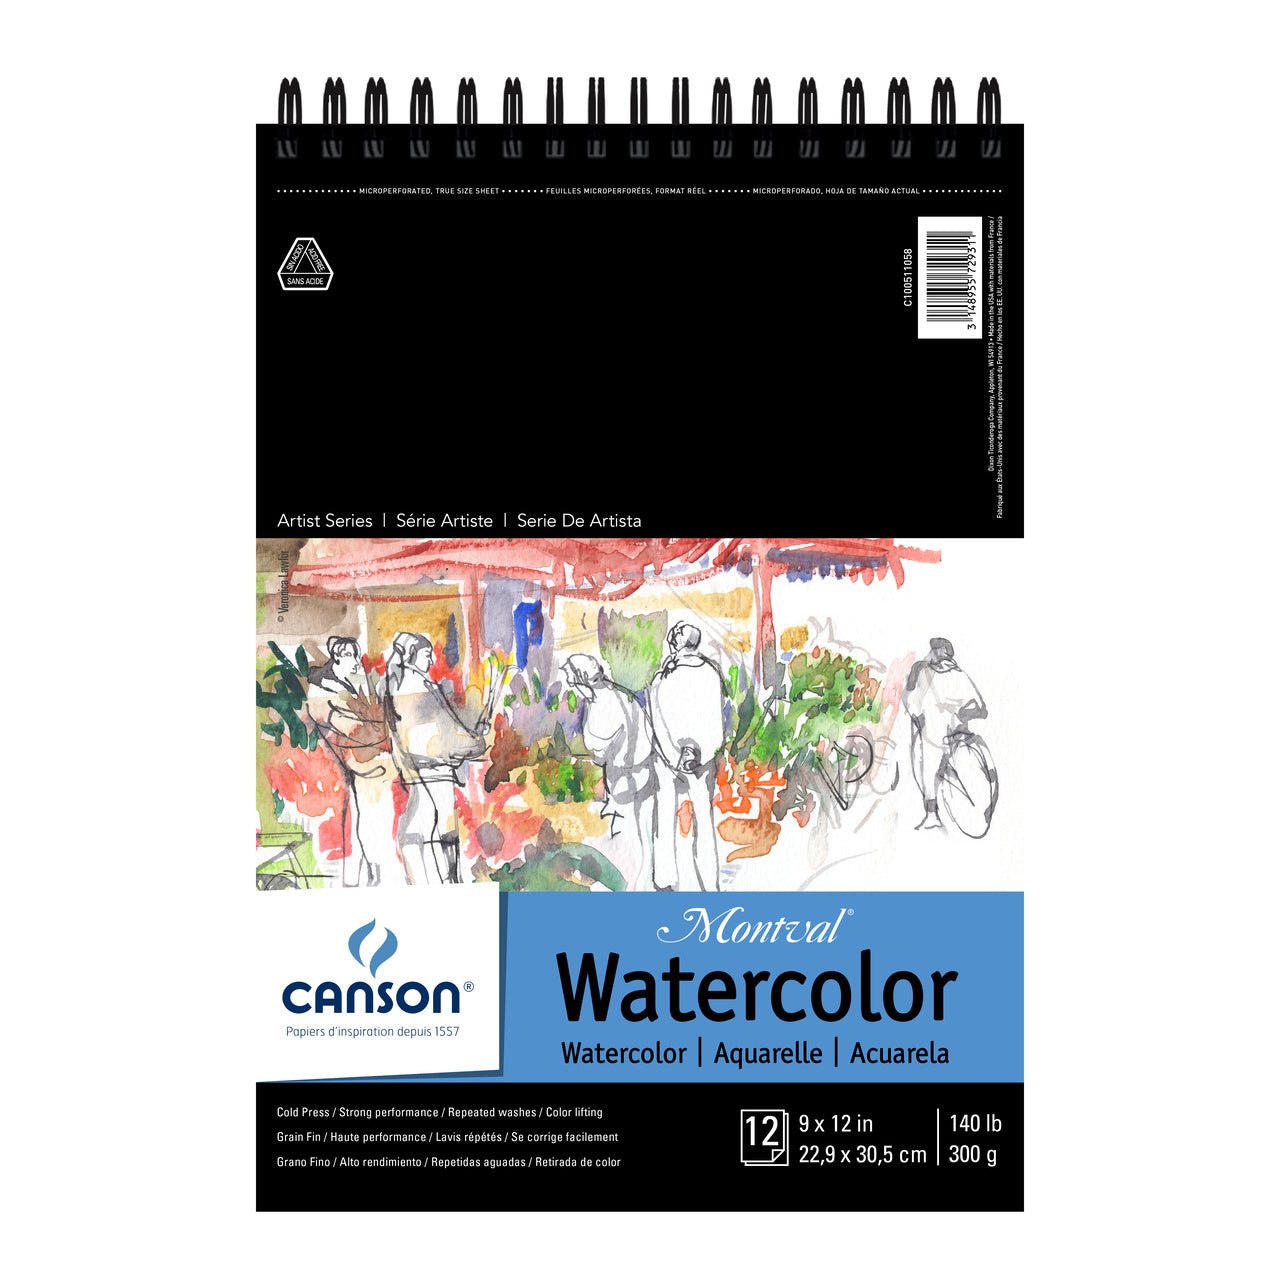 Canson XL Watercolor Pad 9x12 30 Sheets